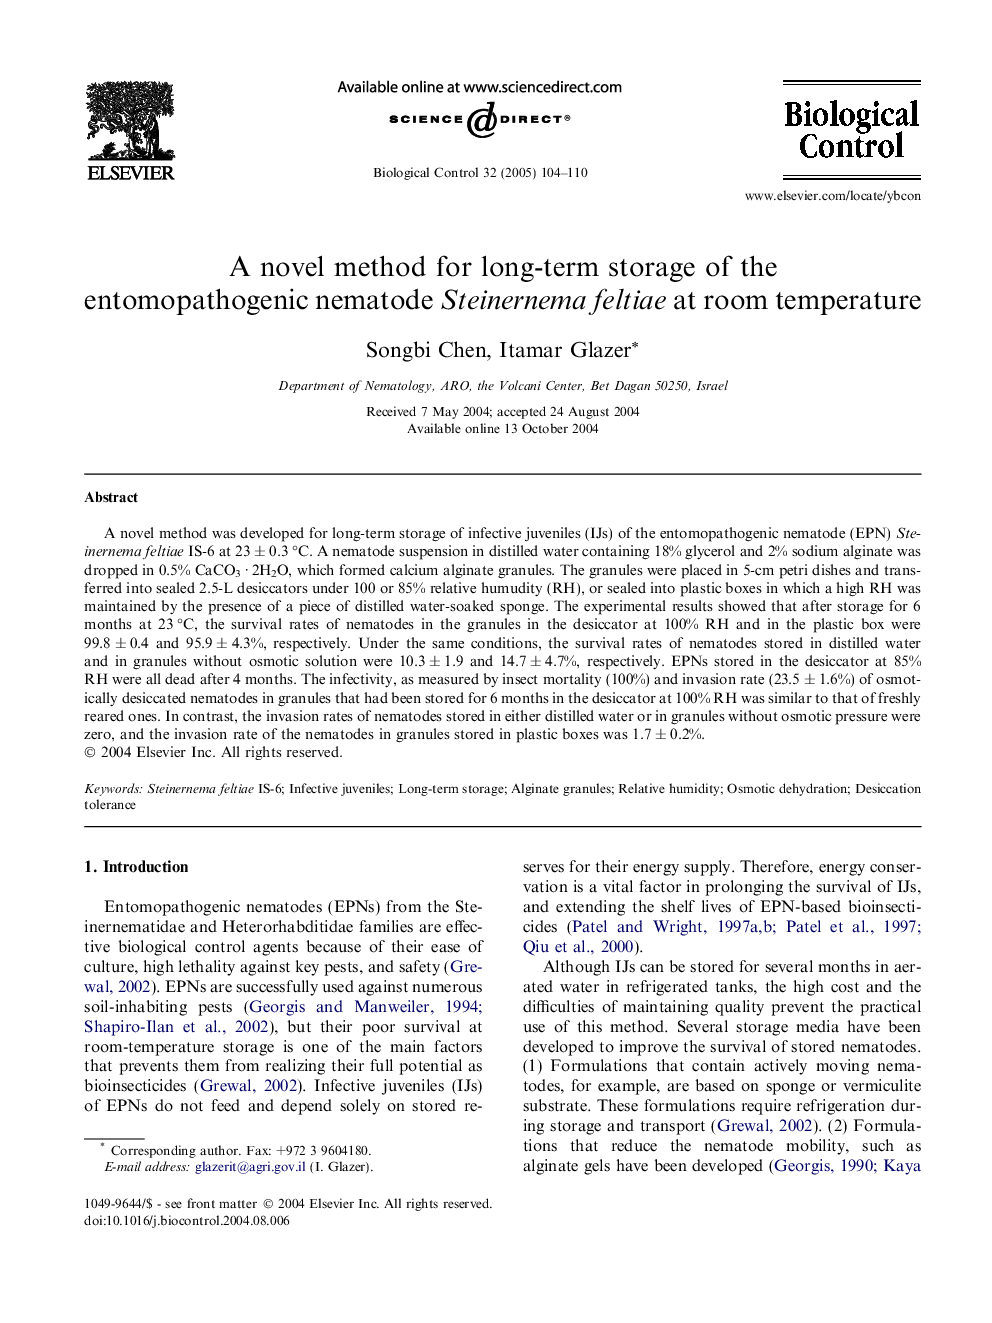 A novel method for long-term storage of the entomopathogenic nematode Steinernema feltiae at room temperature